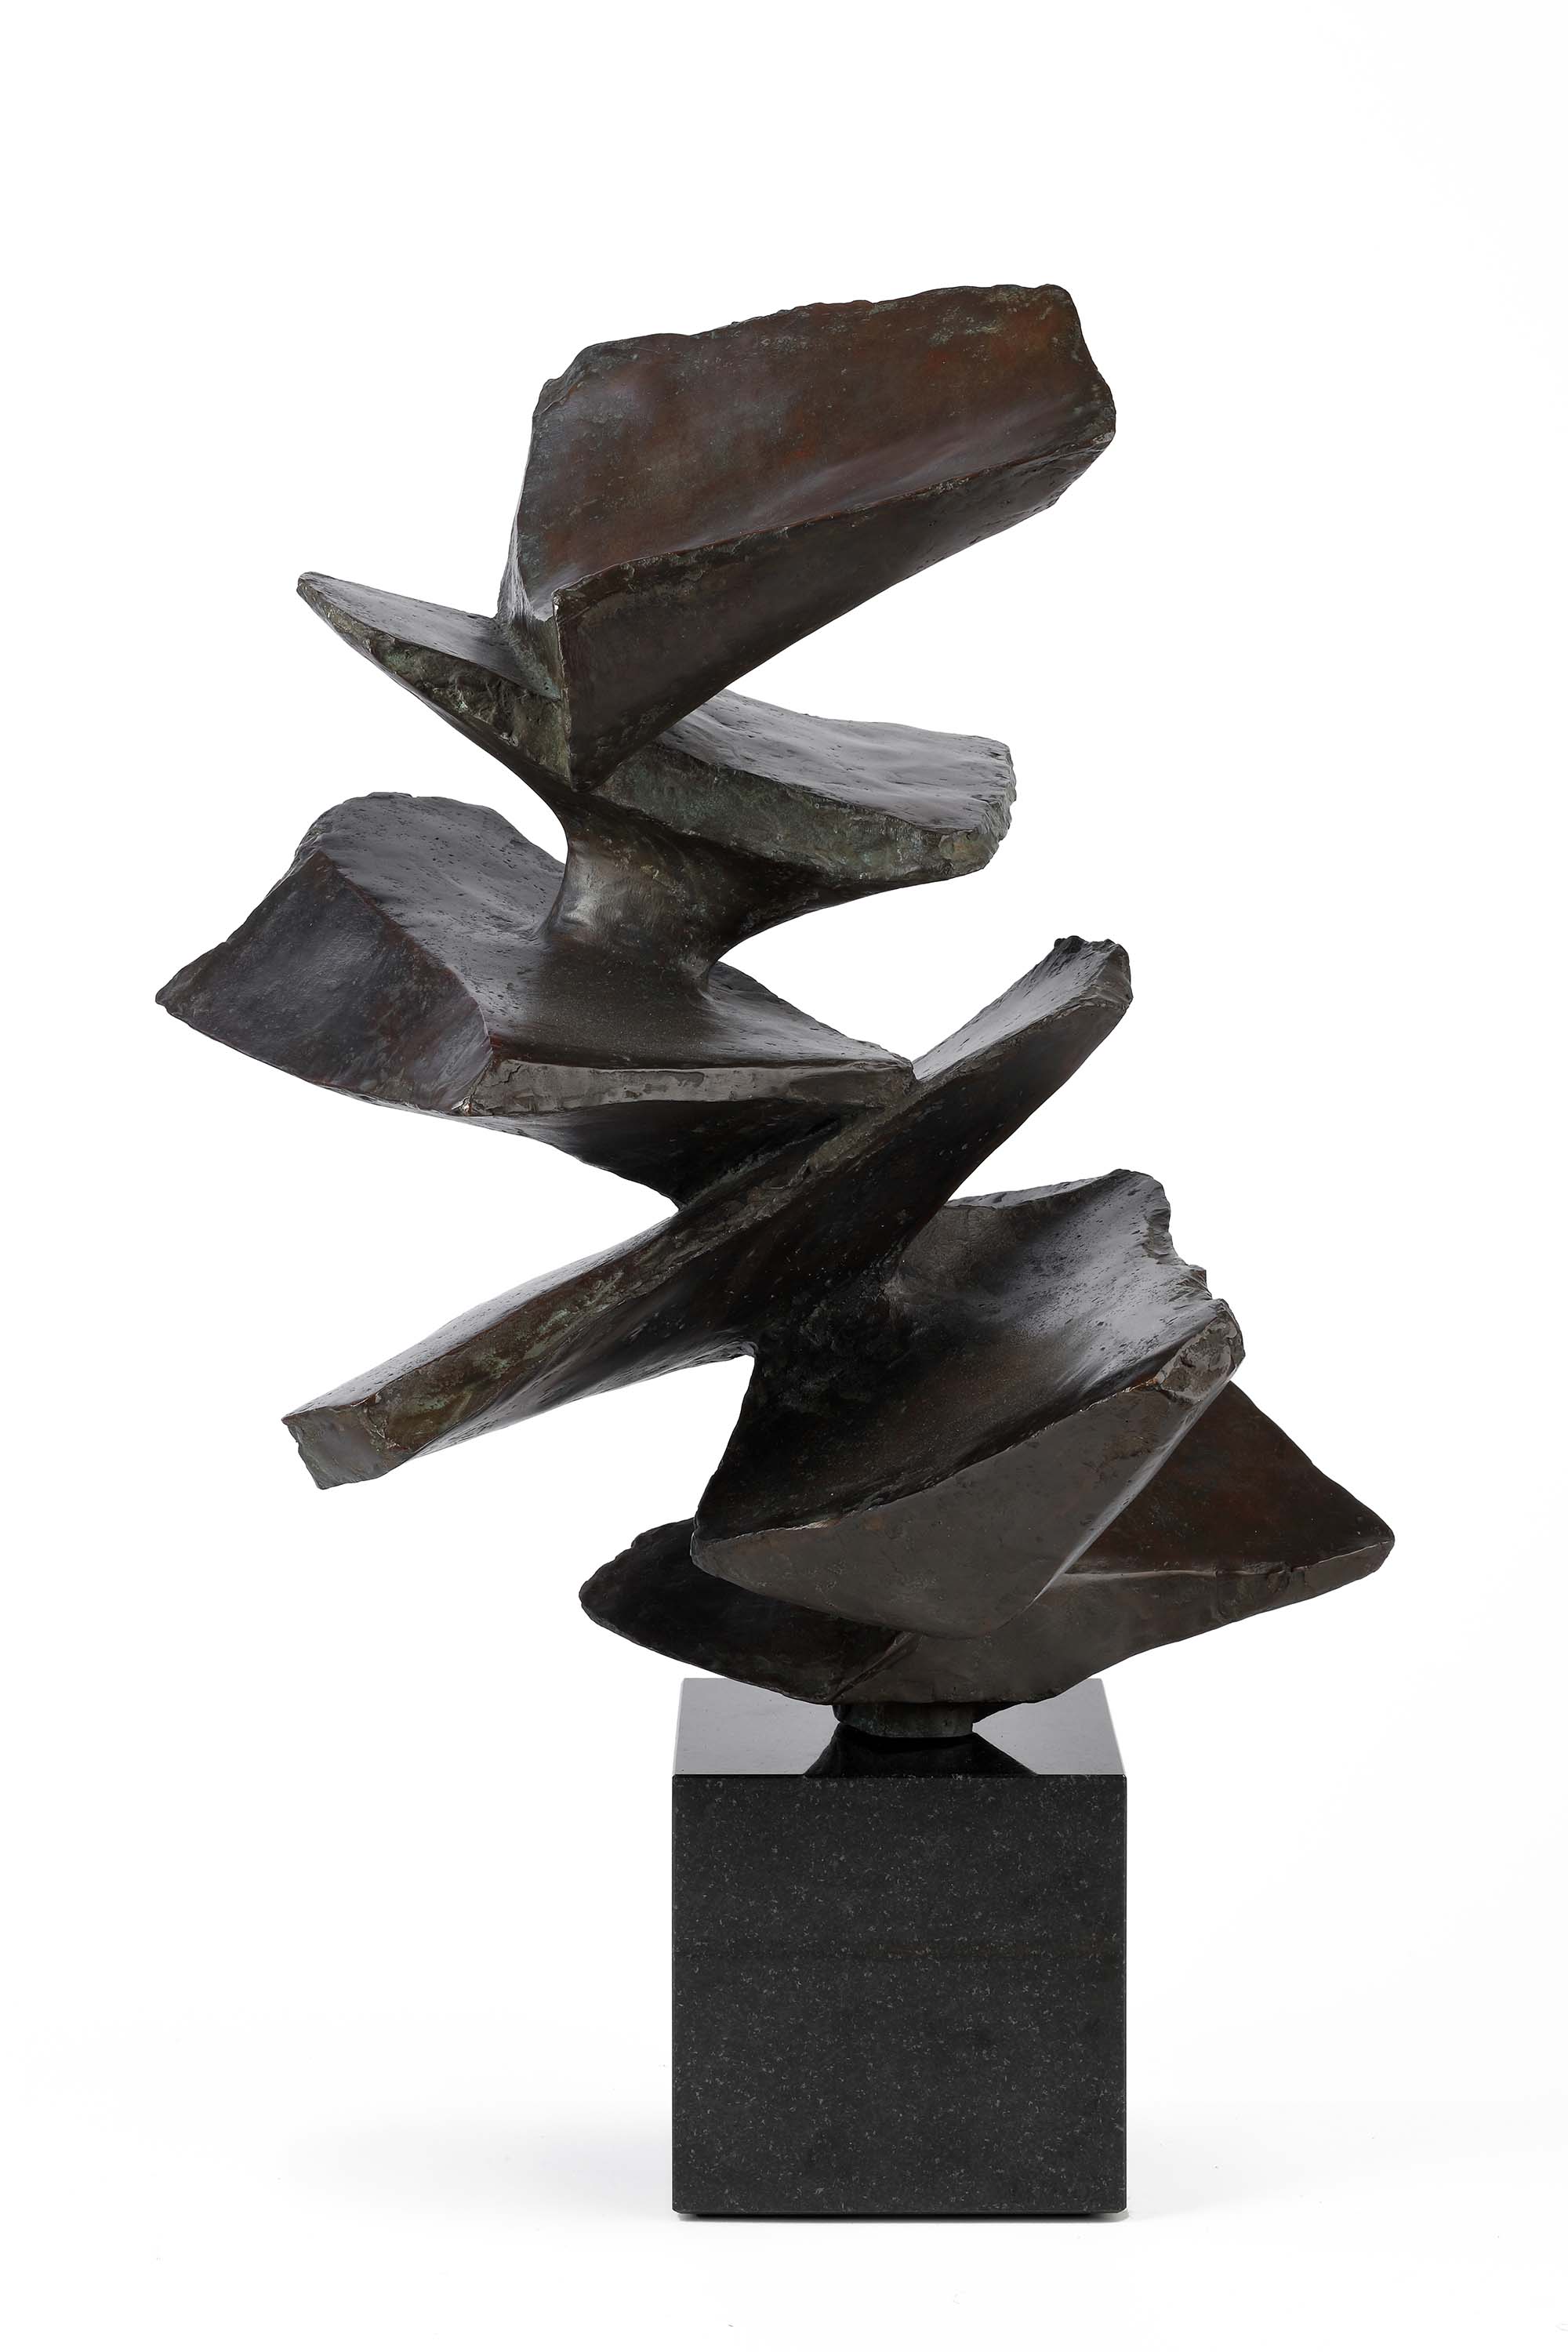 Alicia Penalba. Rumeur d'ailes, 1974, bronze